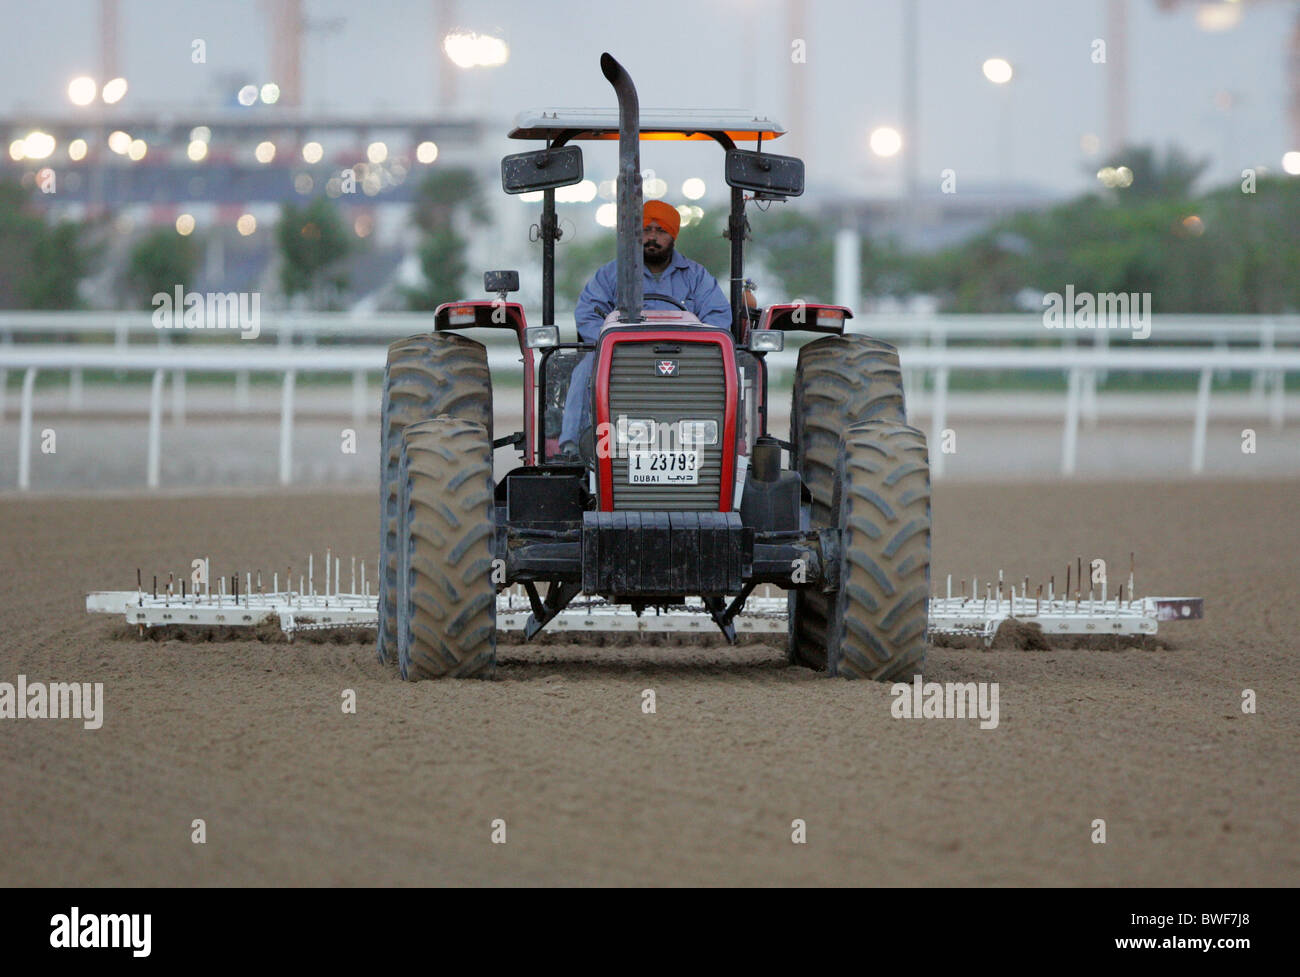 A man horrows the dirt tracks at the Nad al Sheba racecourse, Dubai, UAE Stock Photo